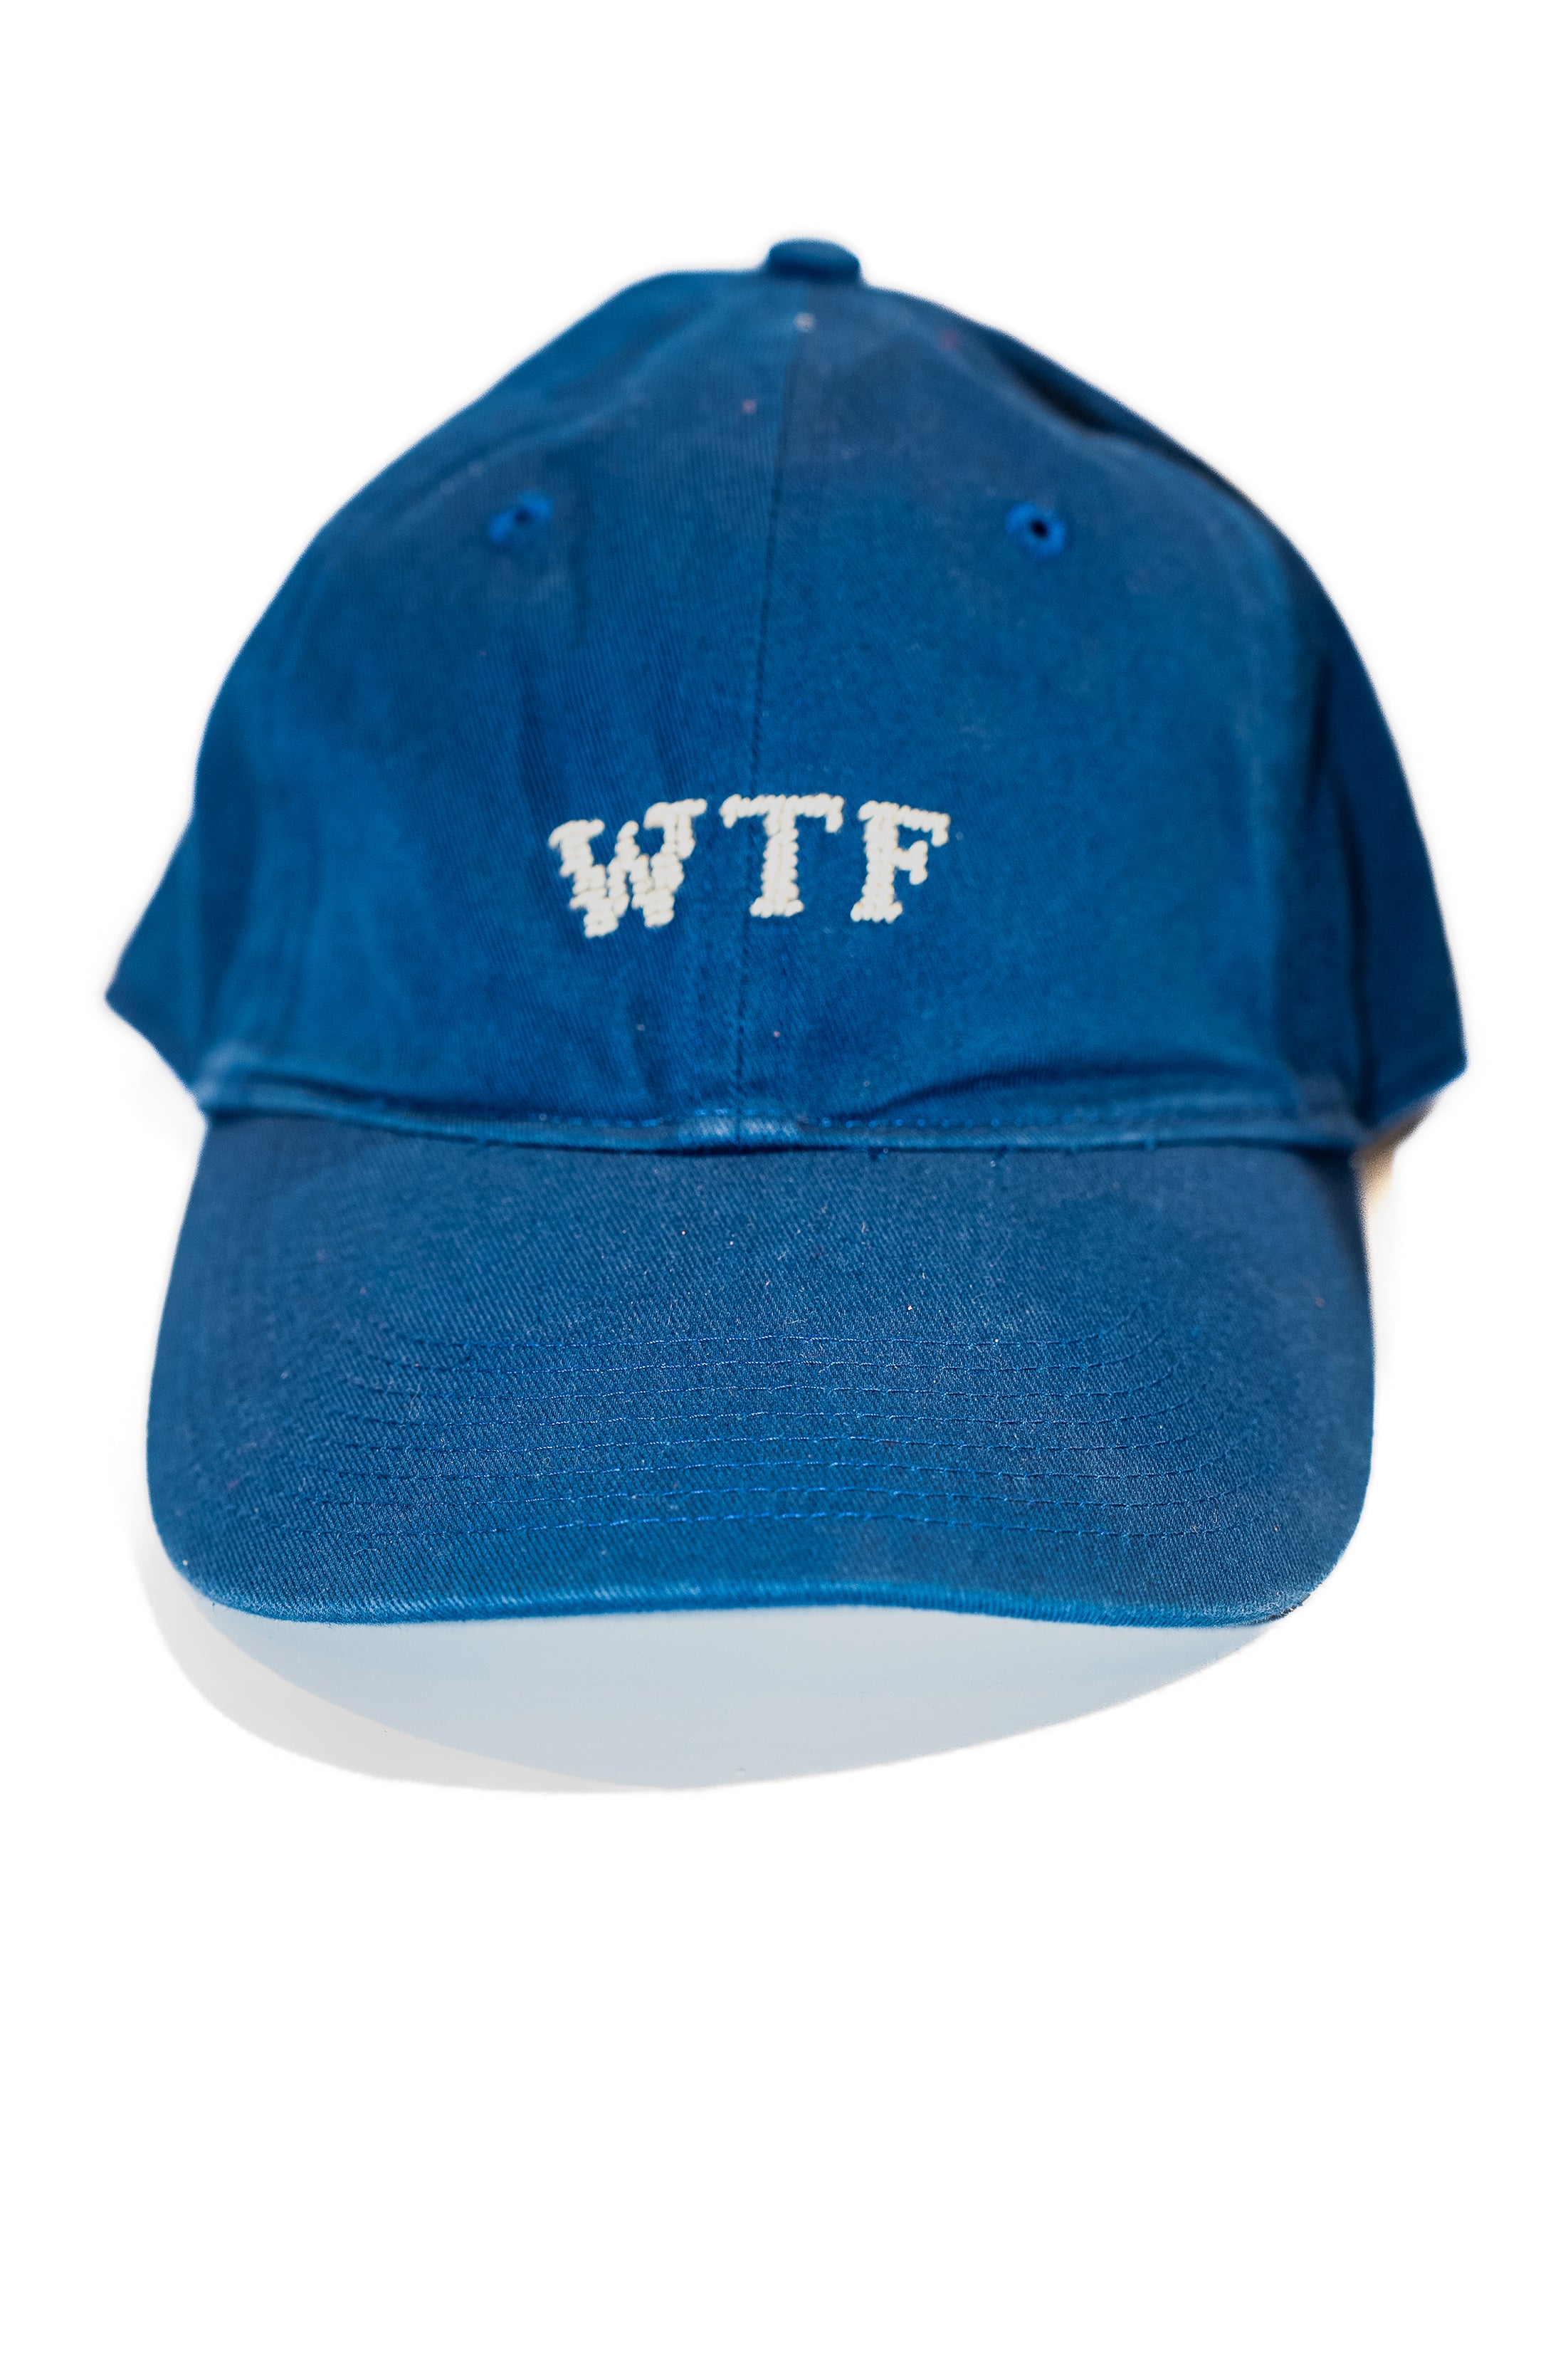 Needlepoint WTF Hat